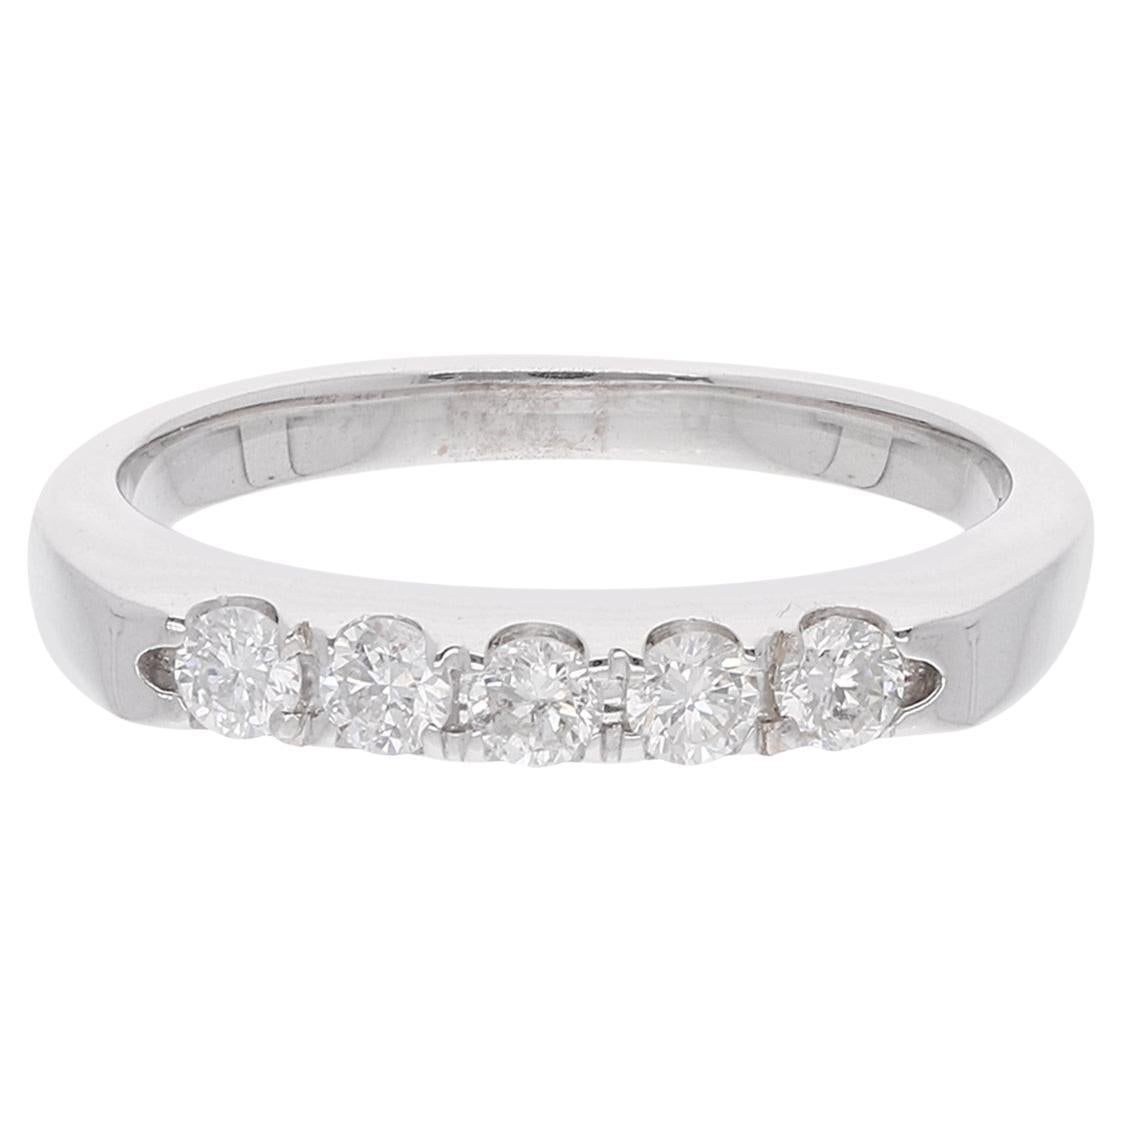 For Sale:  Natural 0.26 Carat Five Diamond Band Ring 14 Karat White Gold Handmade Jewelry